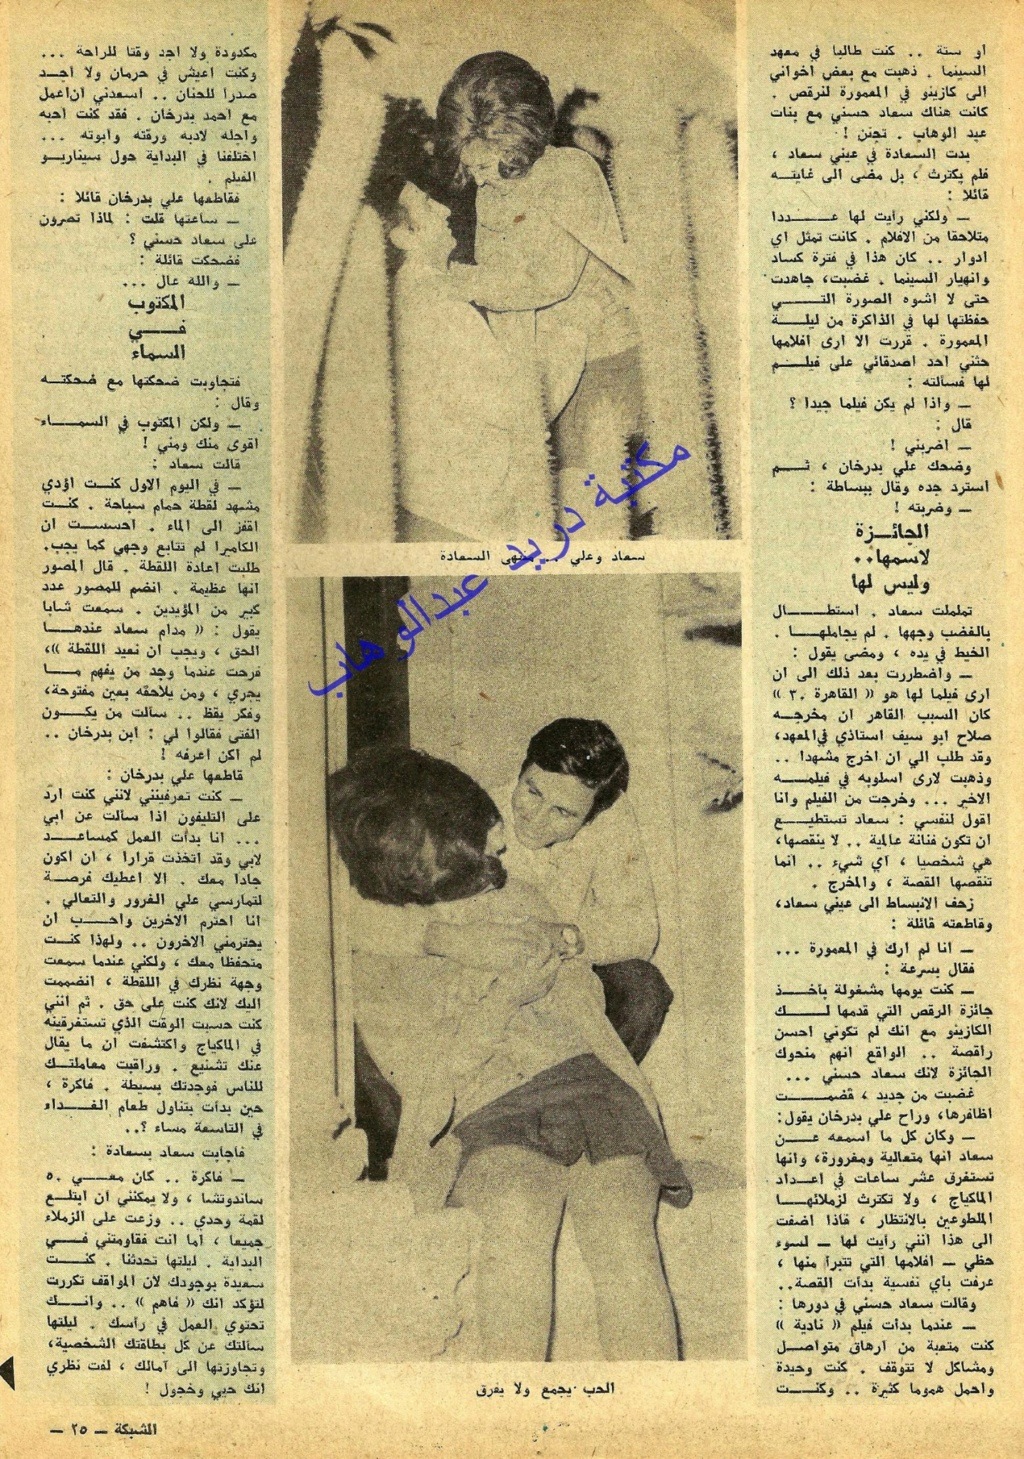 بدرخان - حوار صحفي : قصة حب سعاد حسني وعلي بدرخان 1970 م 2318